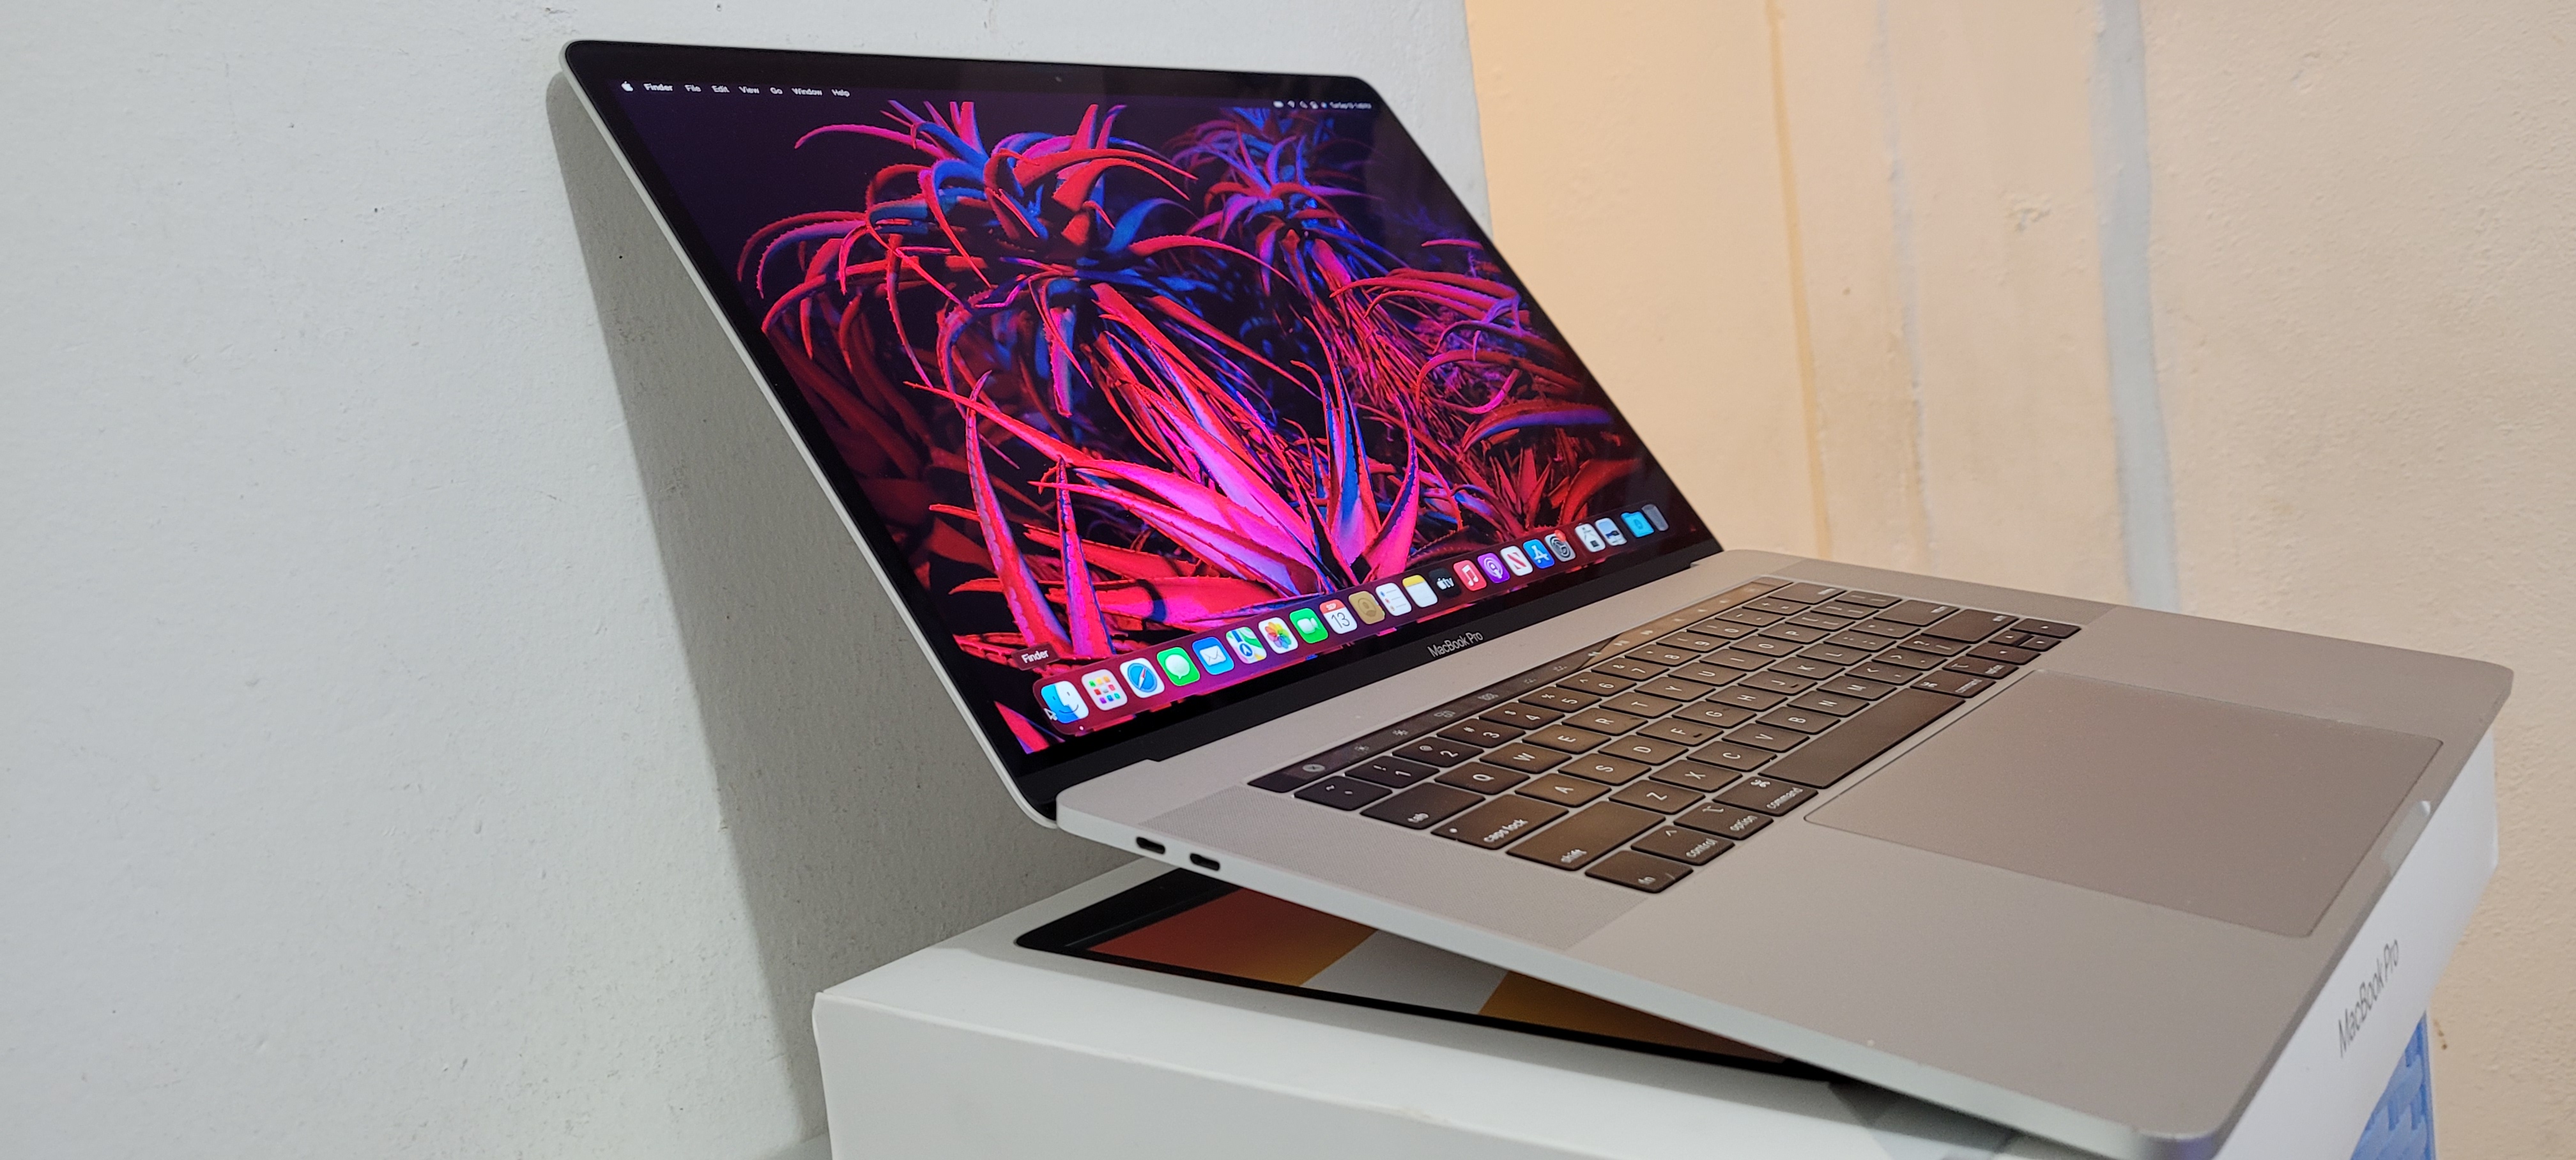 computadoras y laptops - Macbook pro Retina 2019 15 Pulg Core i7 Rqm 16gb Disco 256gb Solido New 2